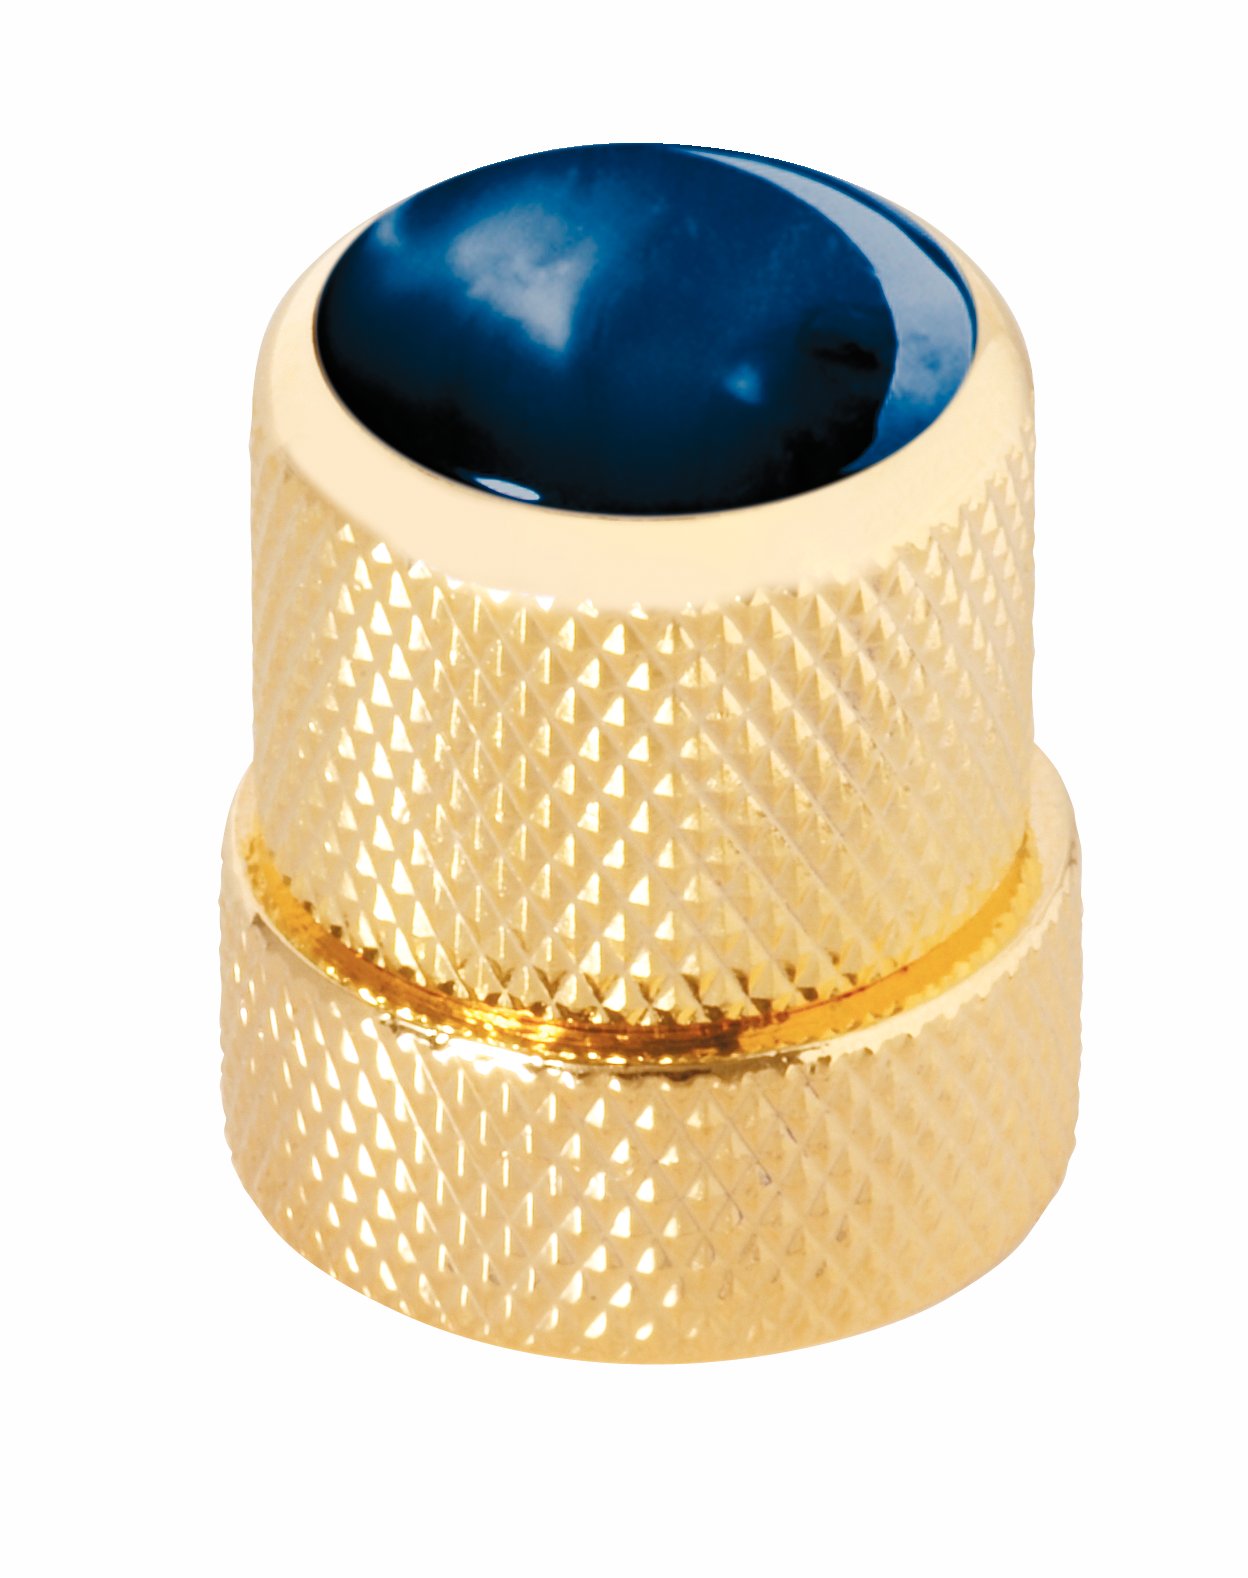 Framus & Warwick - Stacked Potentiometer Dome Knob, Blue Perloid, Cap - Gold